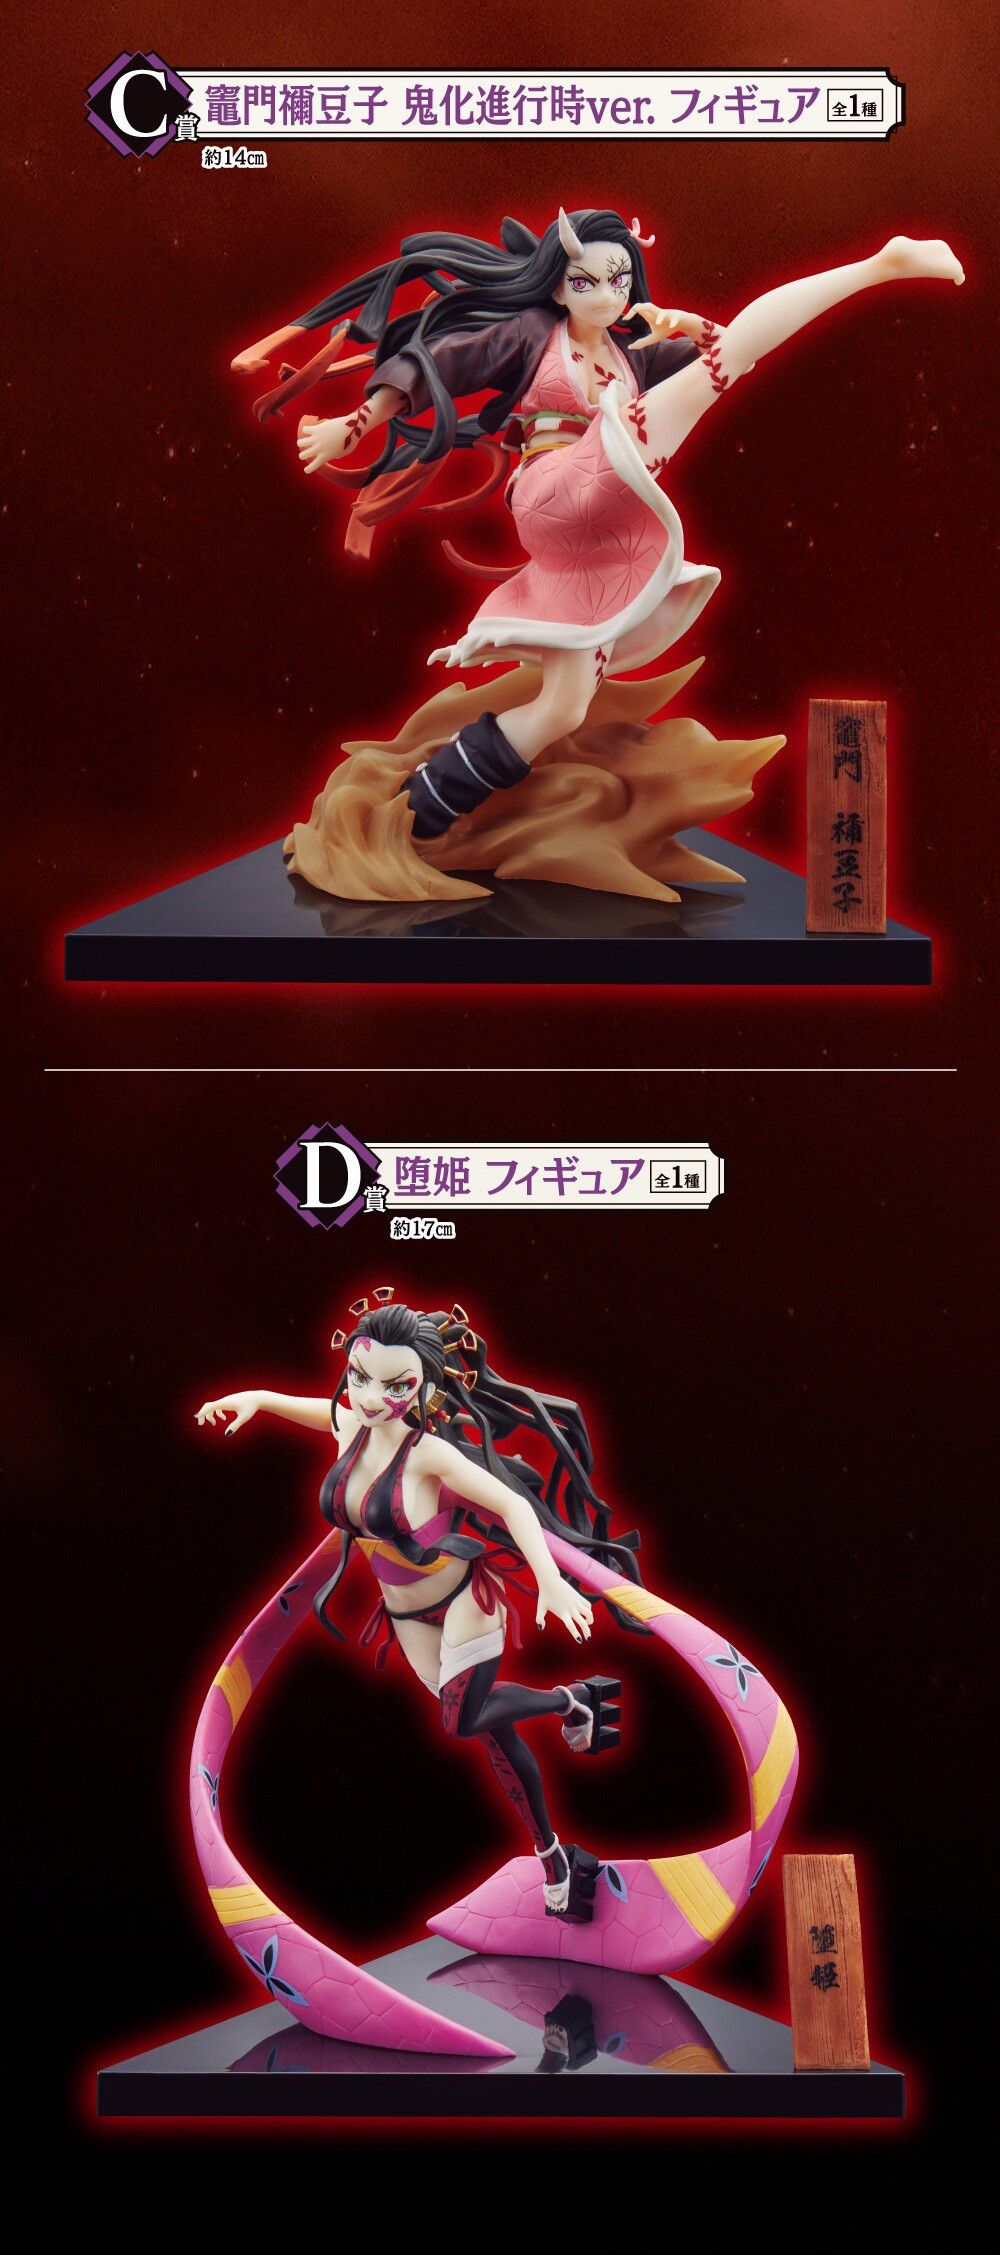 "Blade of Demon Annihilation" The best lottery to win erotic figures of Nezuko and erotic fallen princesses during the progress of demonization! 9